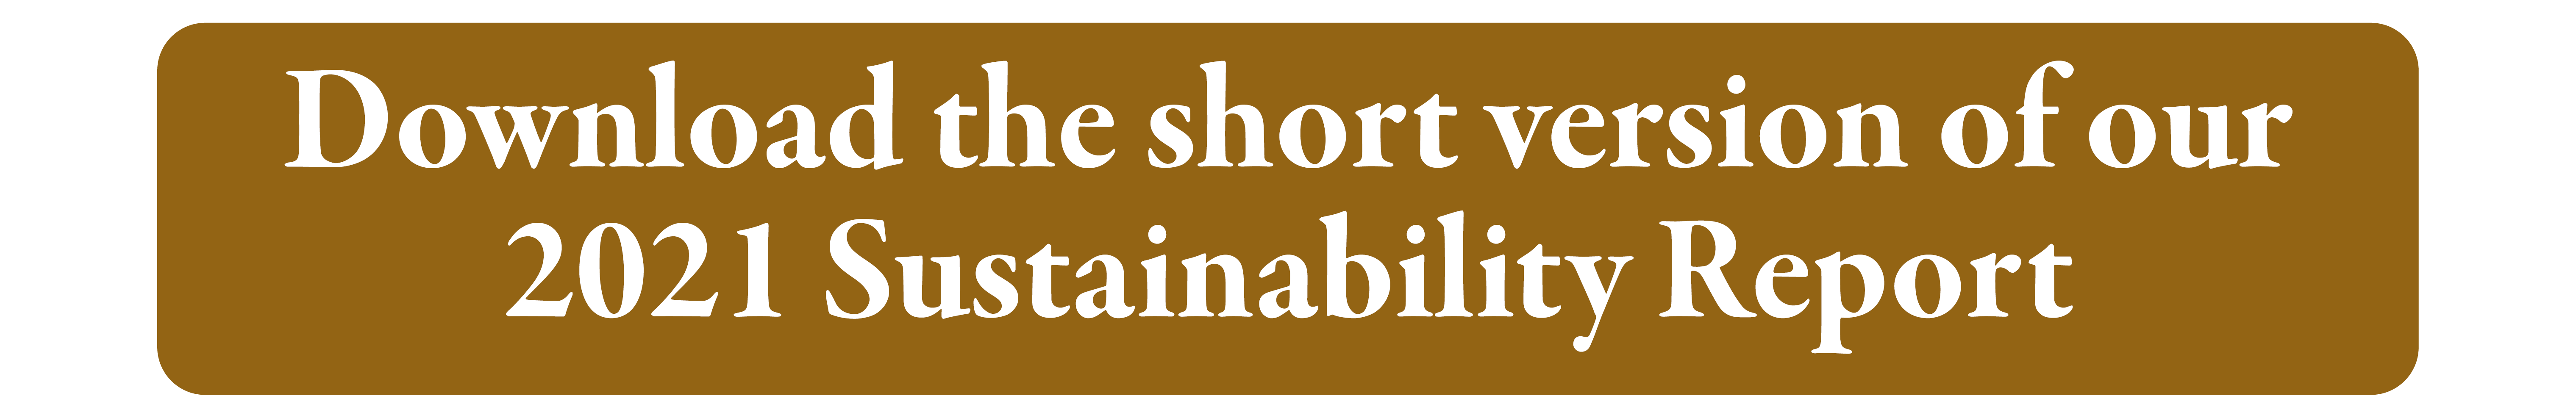 Sustainability Report 2021 - short version